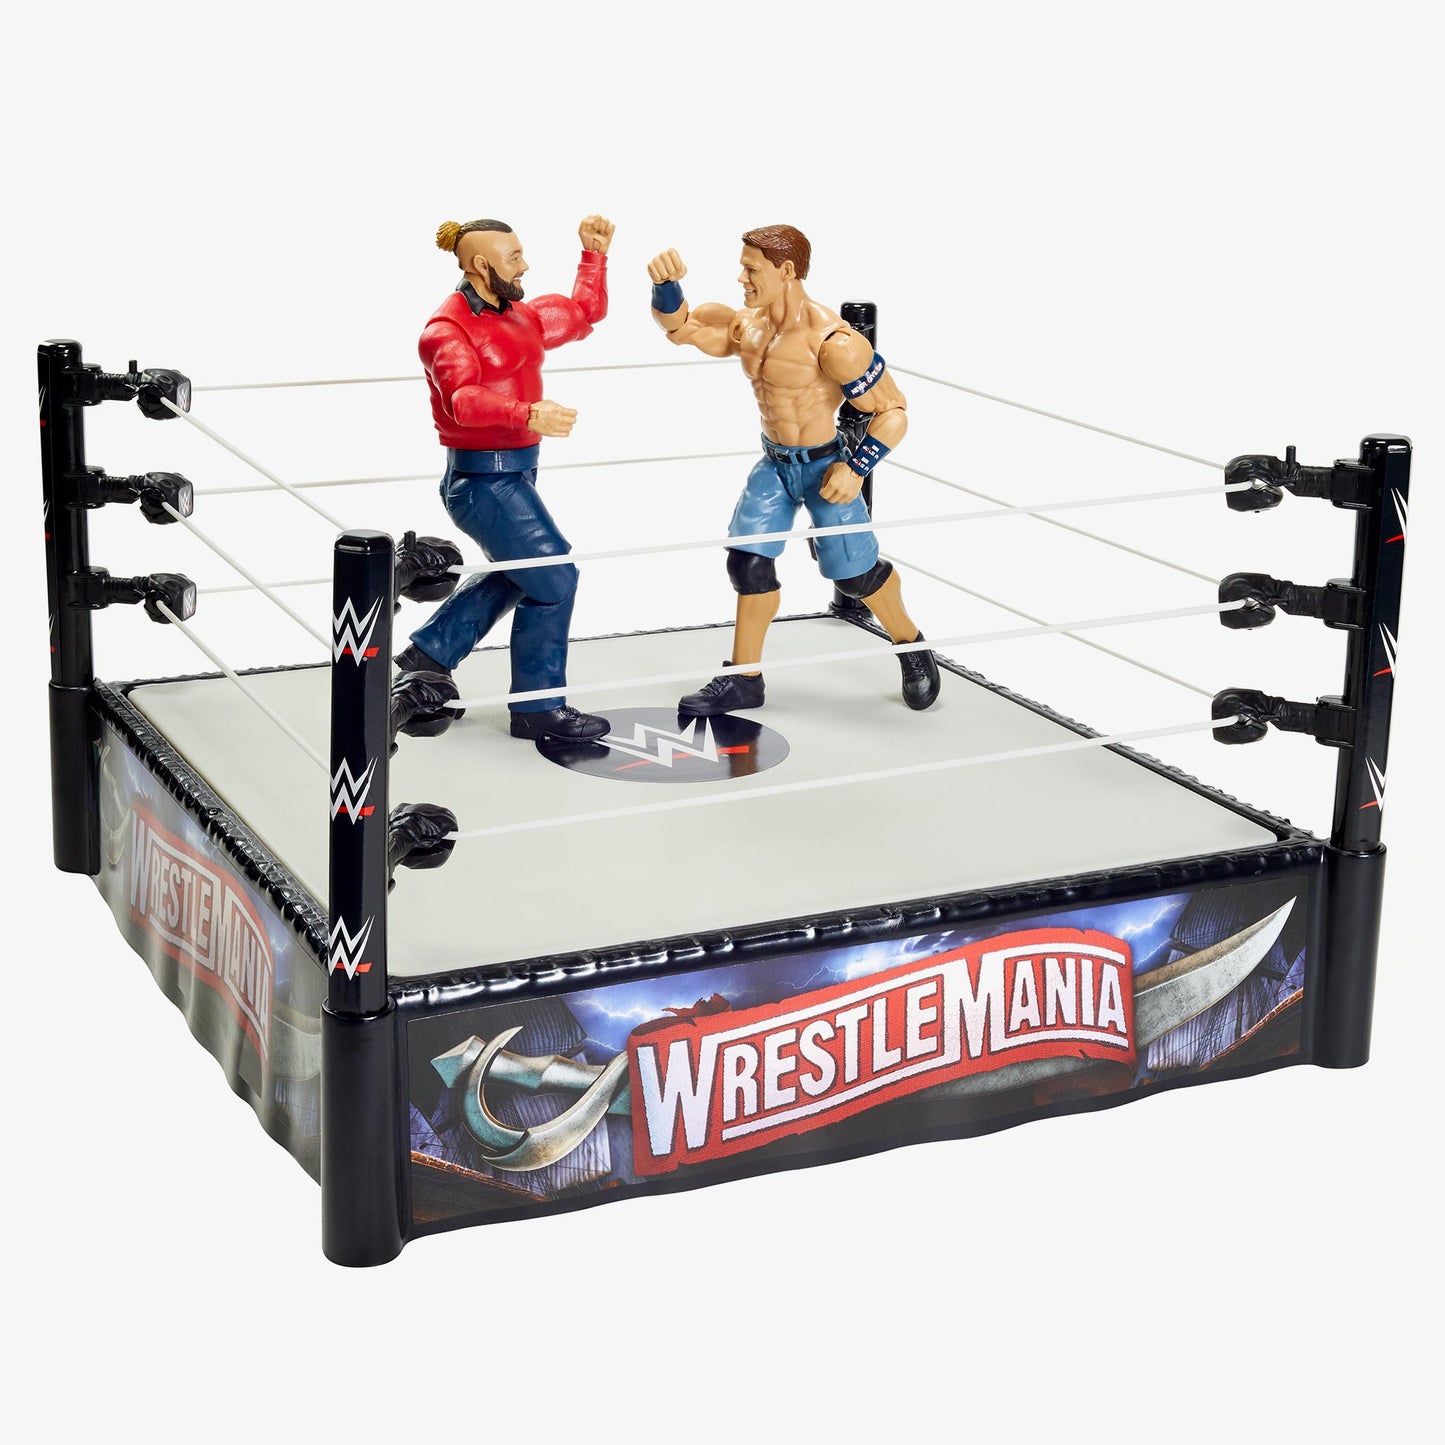 WWE WrestleMania 36 Ring (with John Cena & Bray Wyatt)